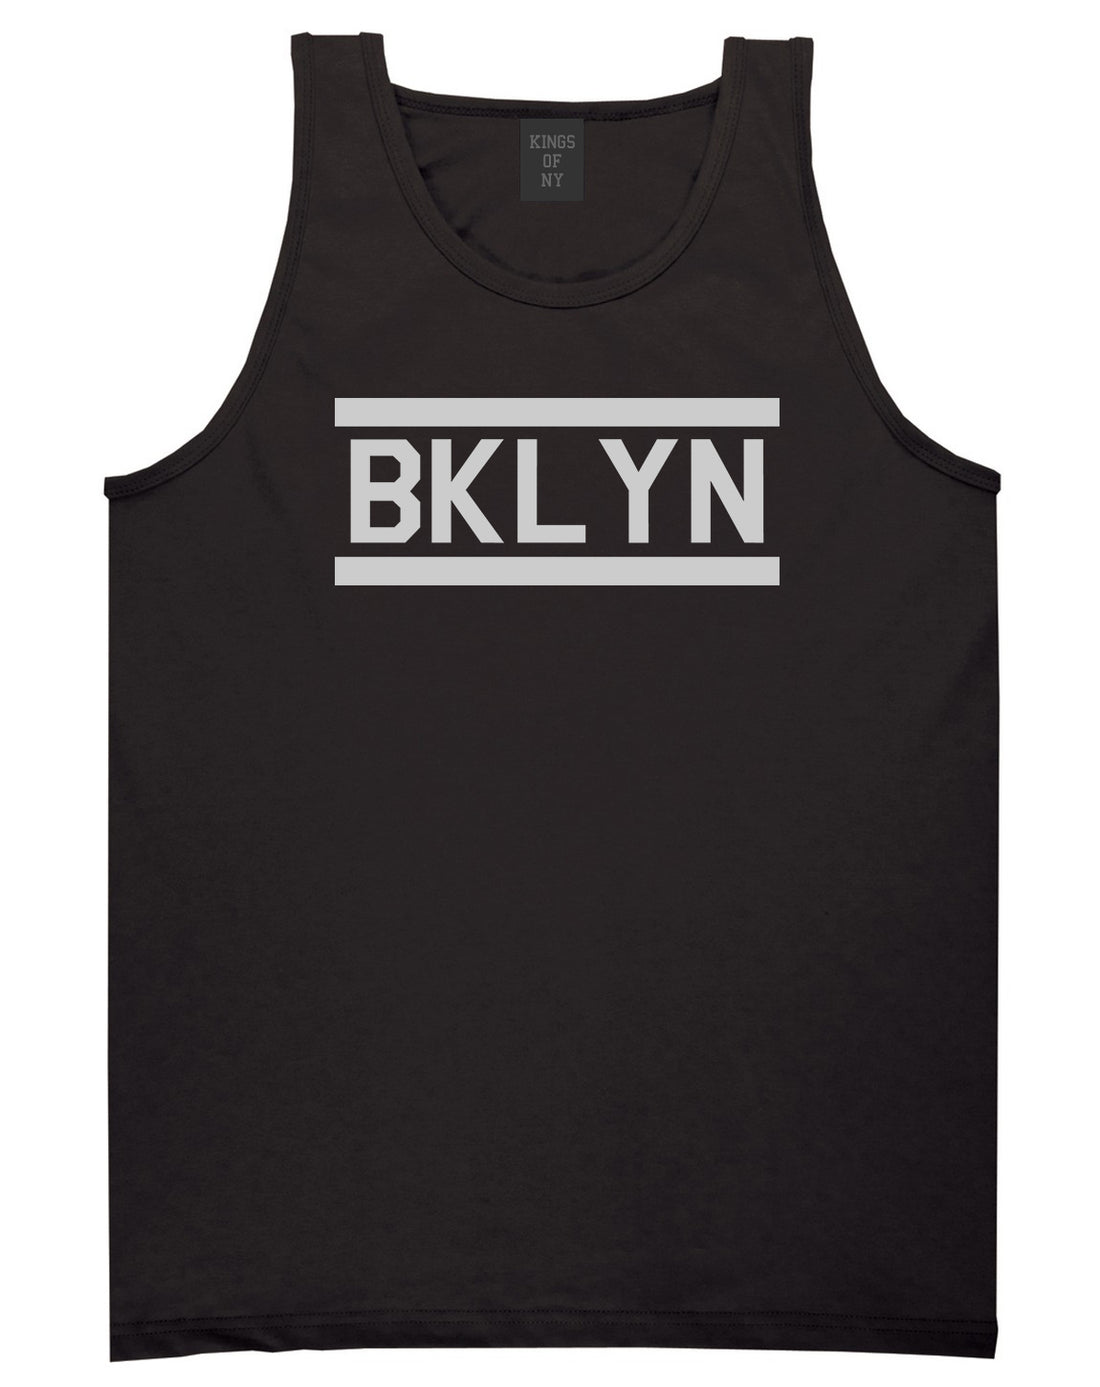 BKLYN Brooklyn Mens Tank Top Shirt Black by Kings Of NY